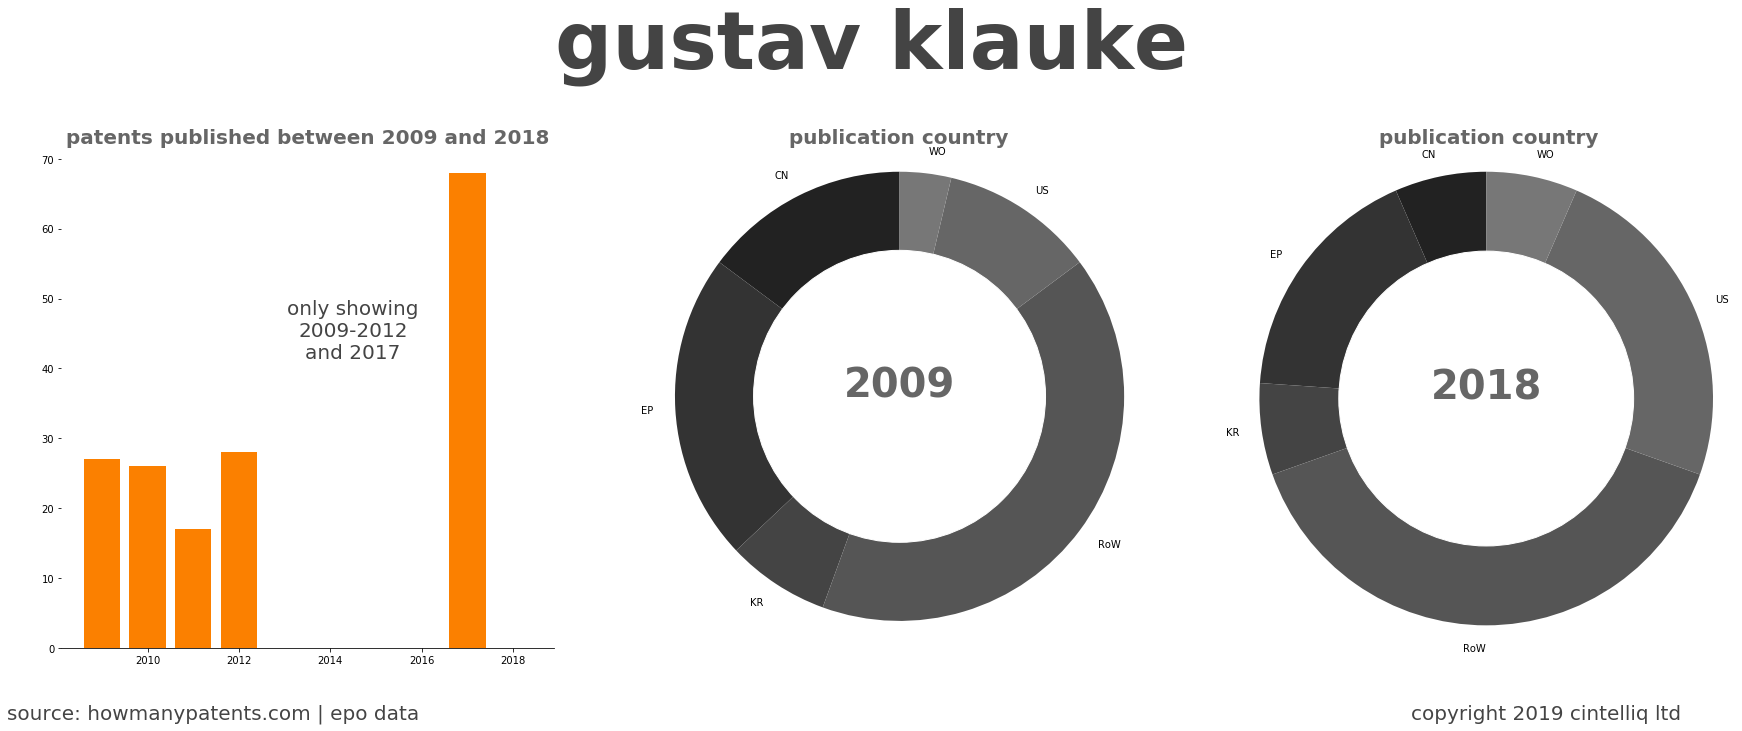 summary of patents for Gustav Klauke